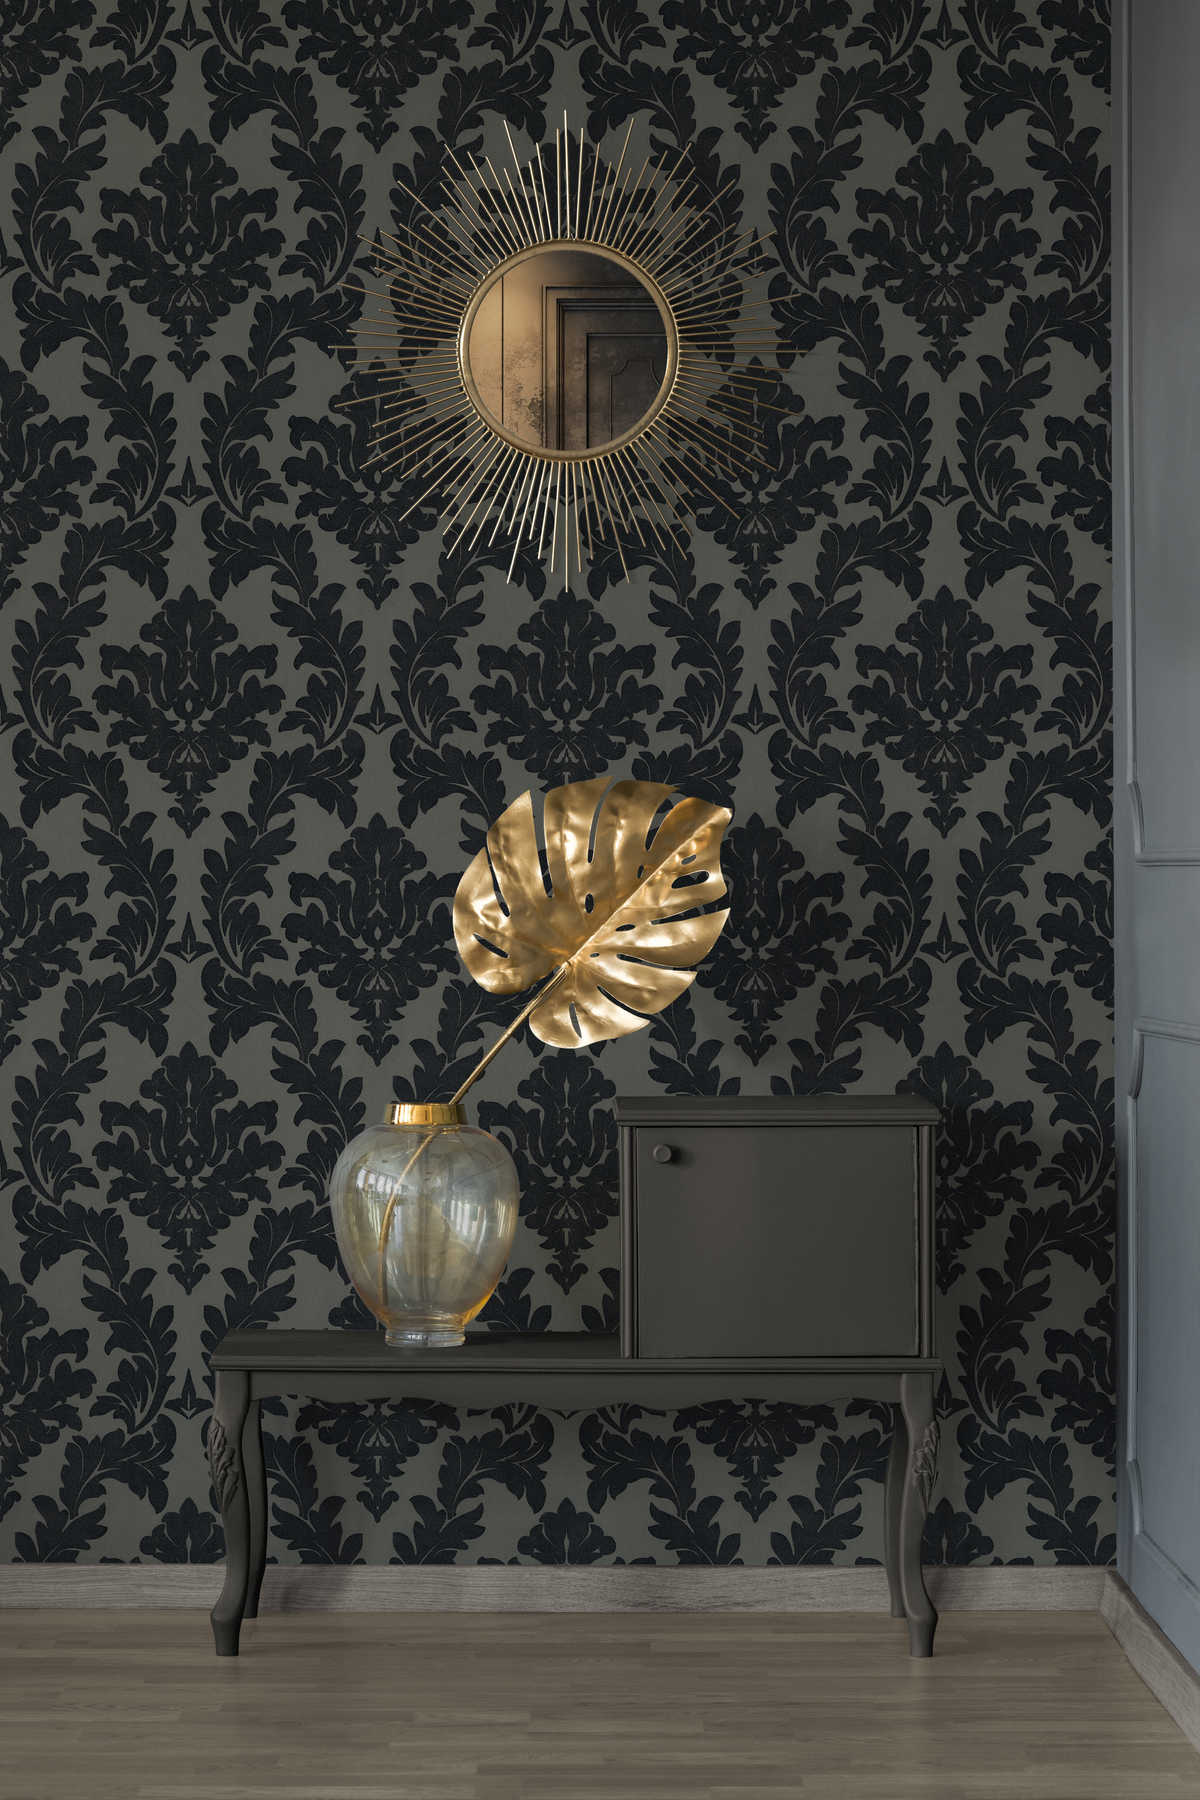             Black baroque wallpaper with ornaments & metallic effect
        